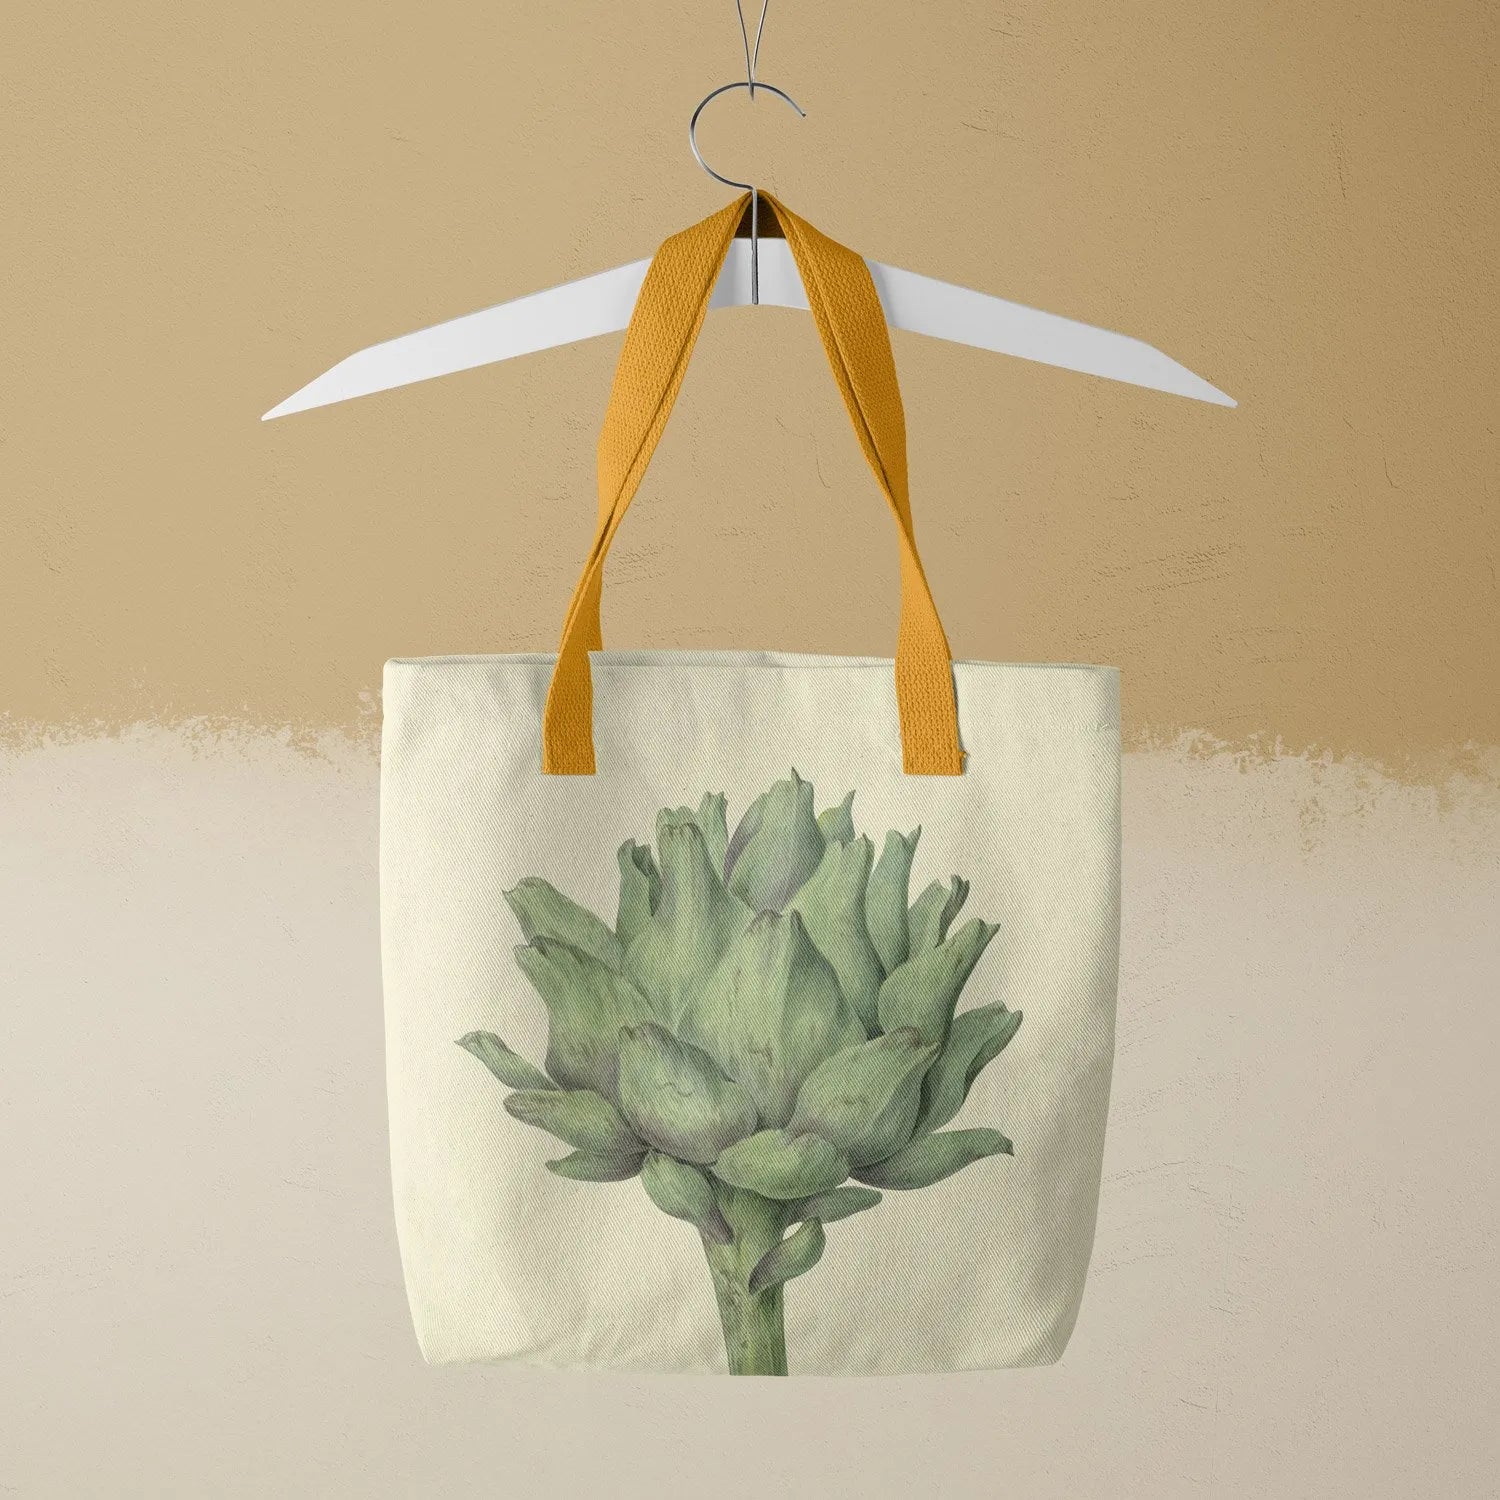 Heartichoke Tote - Lemon Butter - Heavy Duty Reusable Grocery Bag - Yellow Handles - Shopping Totes - Aesthetic Art